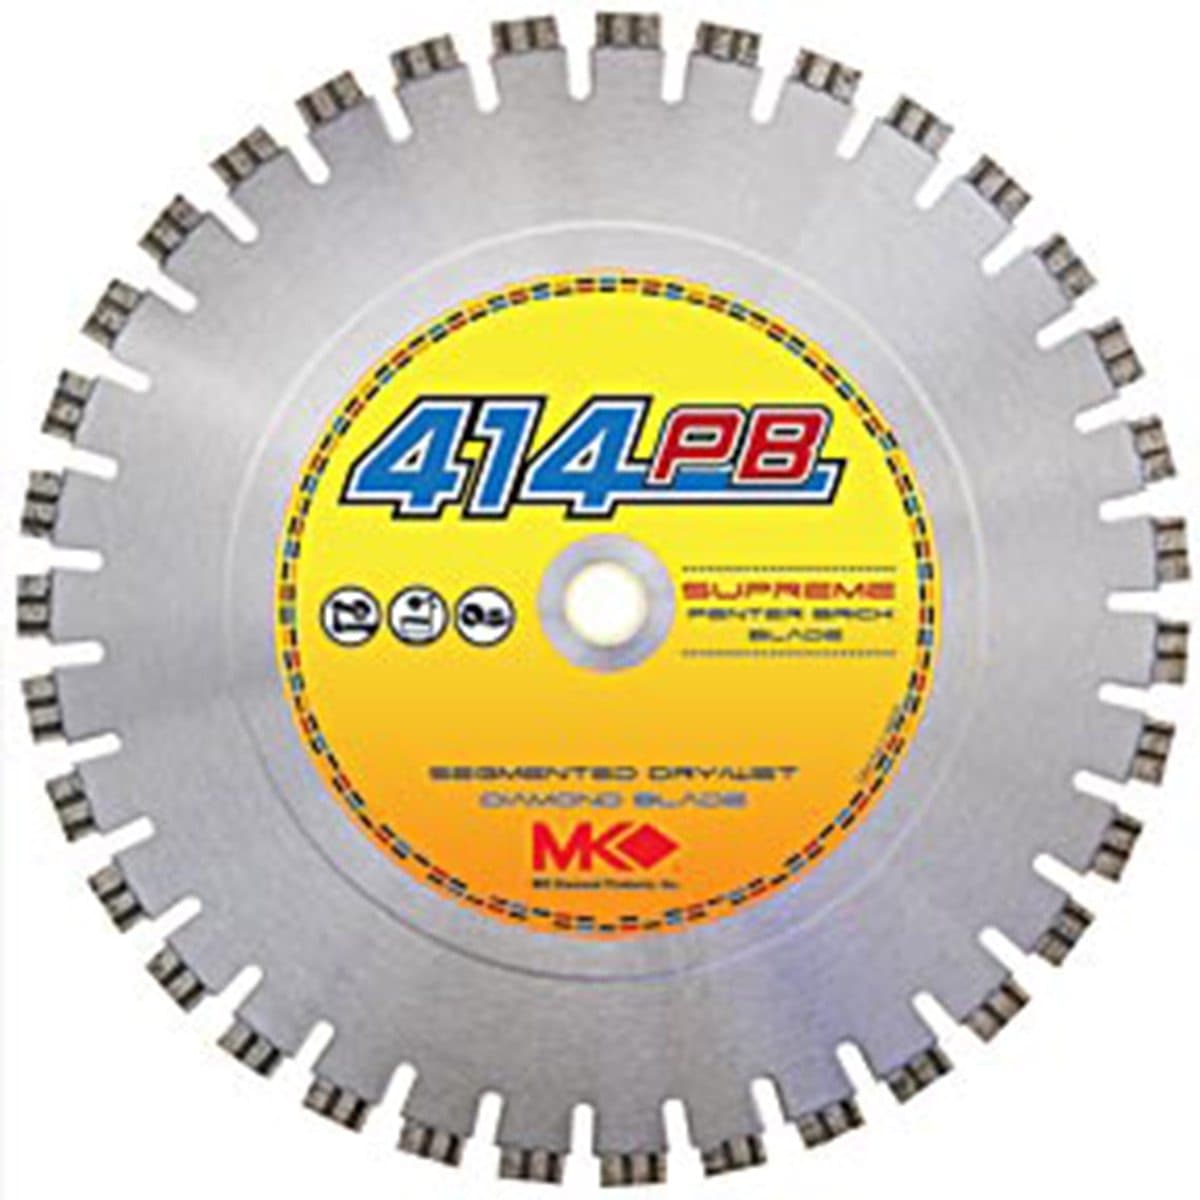 MK-414PB Dry Cutting Hard Brick Blades (Supreme) - MK Diamond